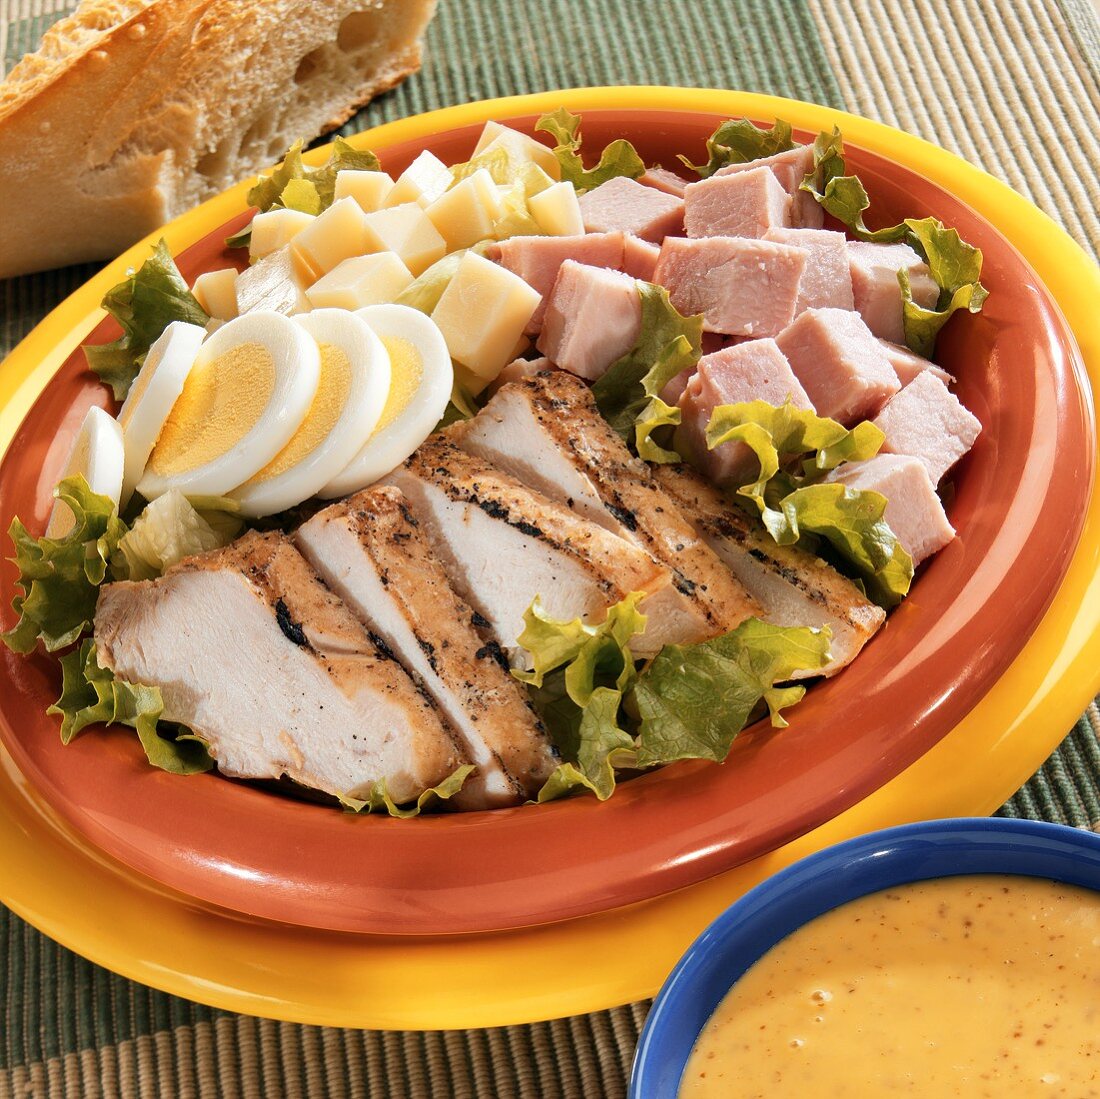 Chef salad with chicken, ham, egg & cheese; mustard dressing